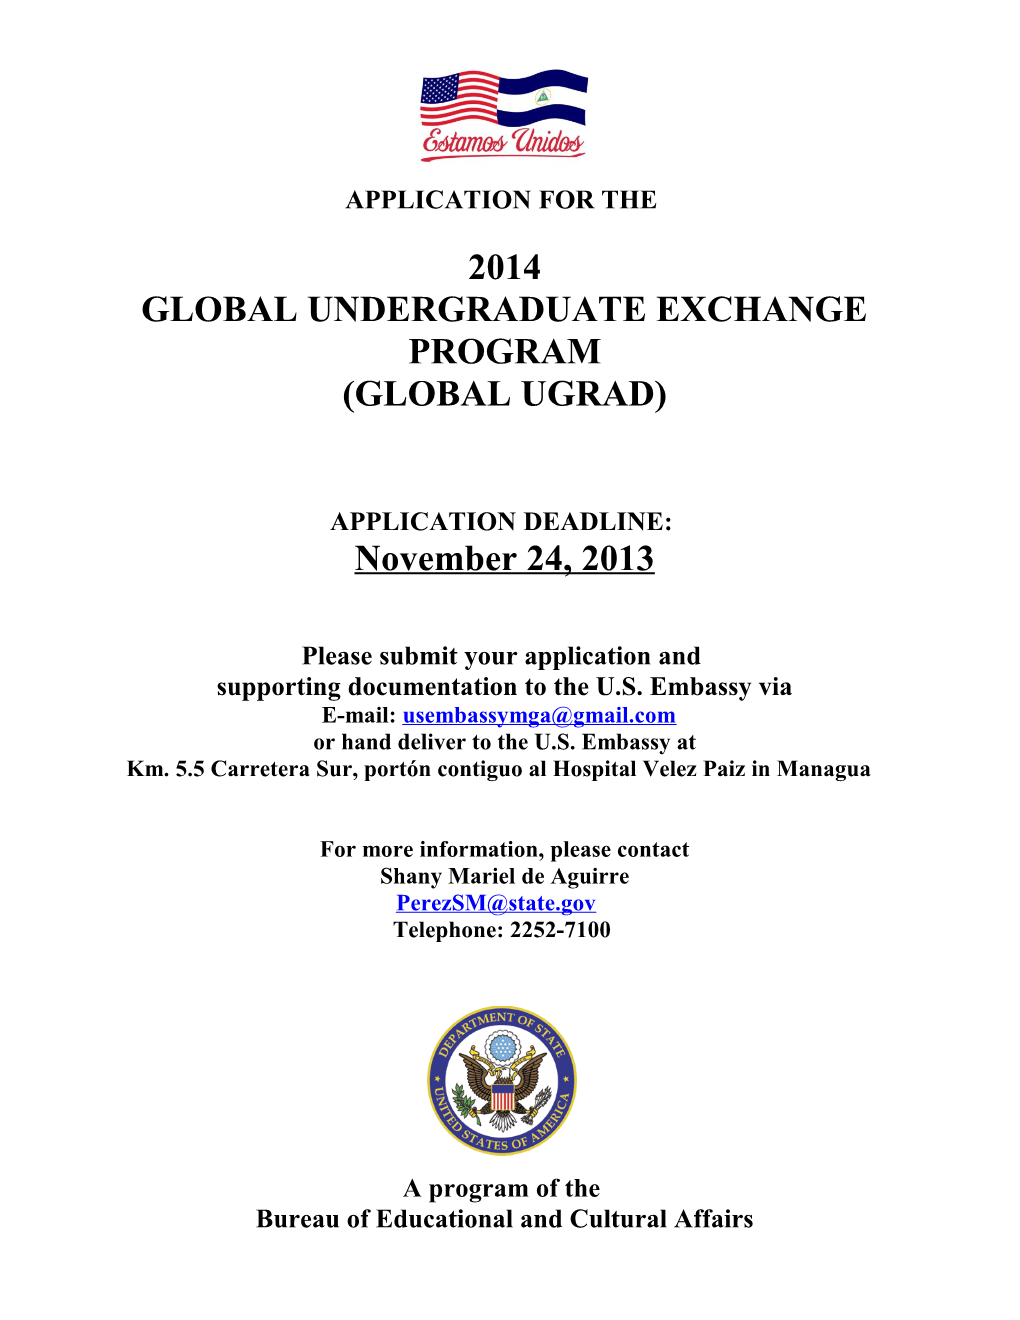 Global Undergraduate Exchange Program s1